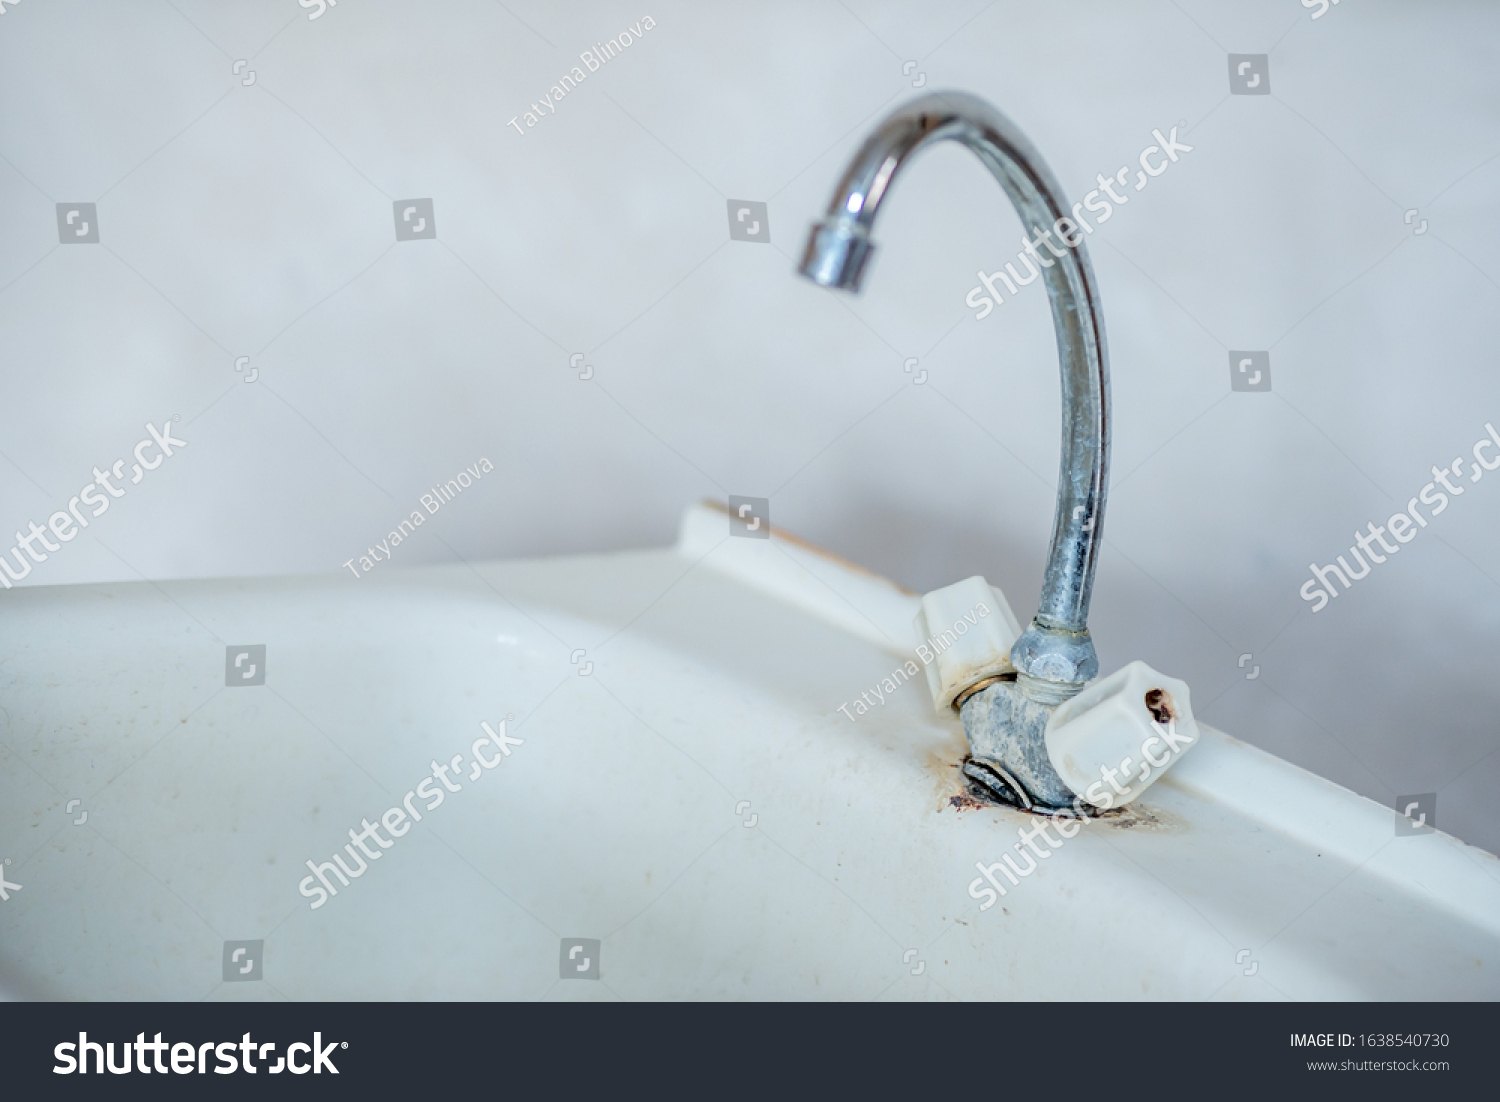 Hot Water Repair Images Stock Photos Vectors Shutterstock